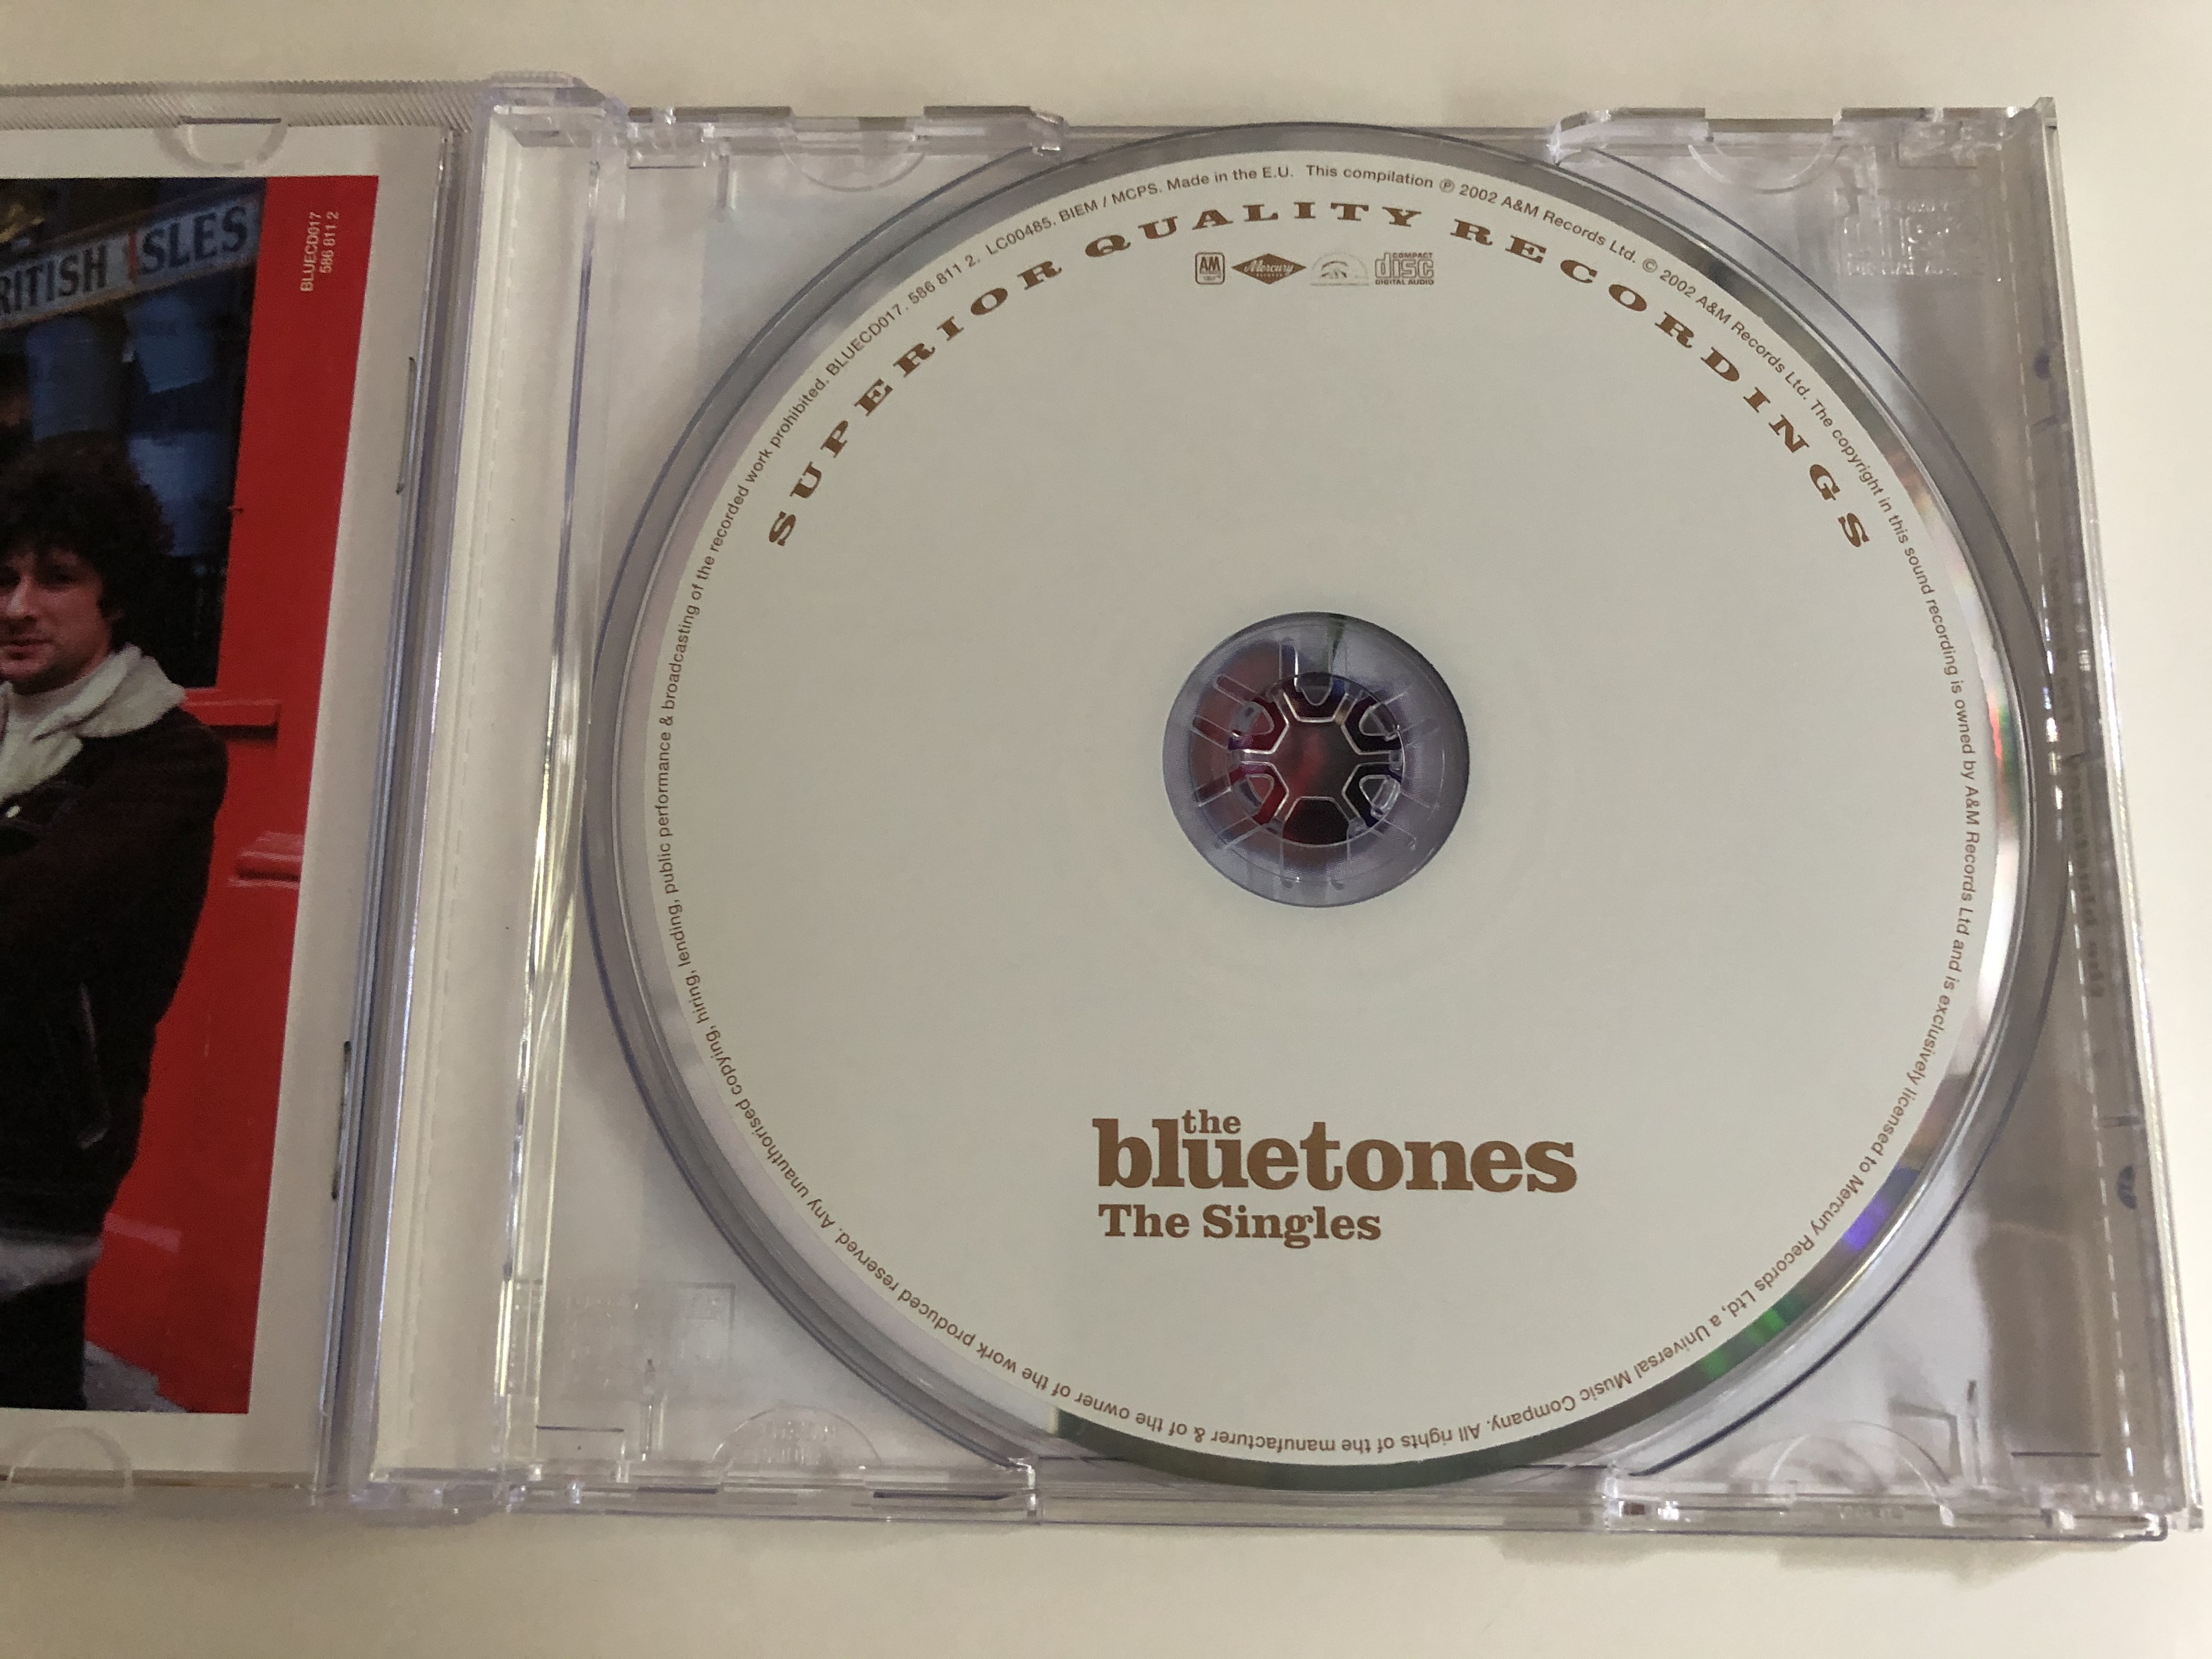 the-bluetones-the-singles-a-m-records-audio-cd-2002-568-811-2-8-.jpg